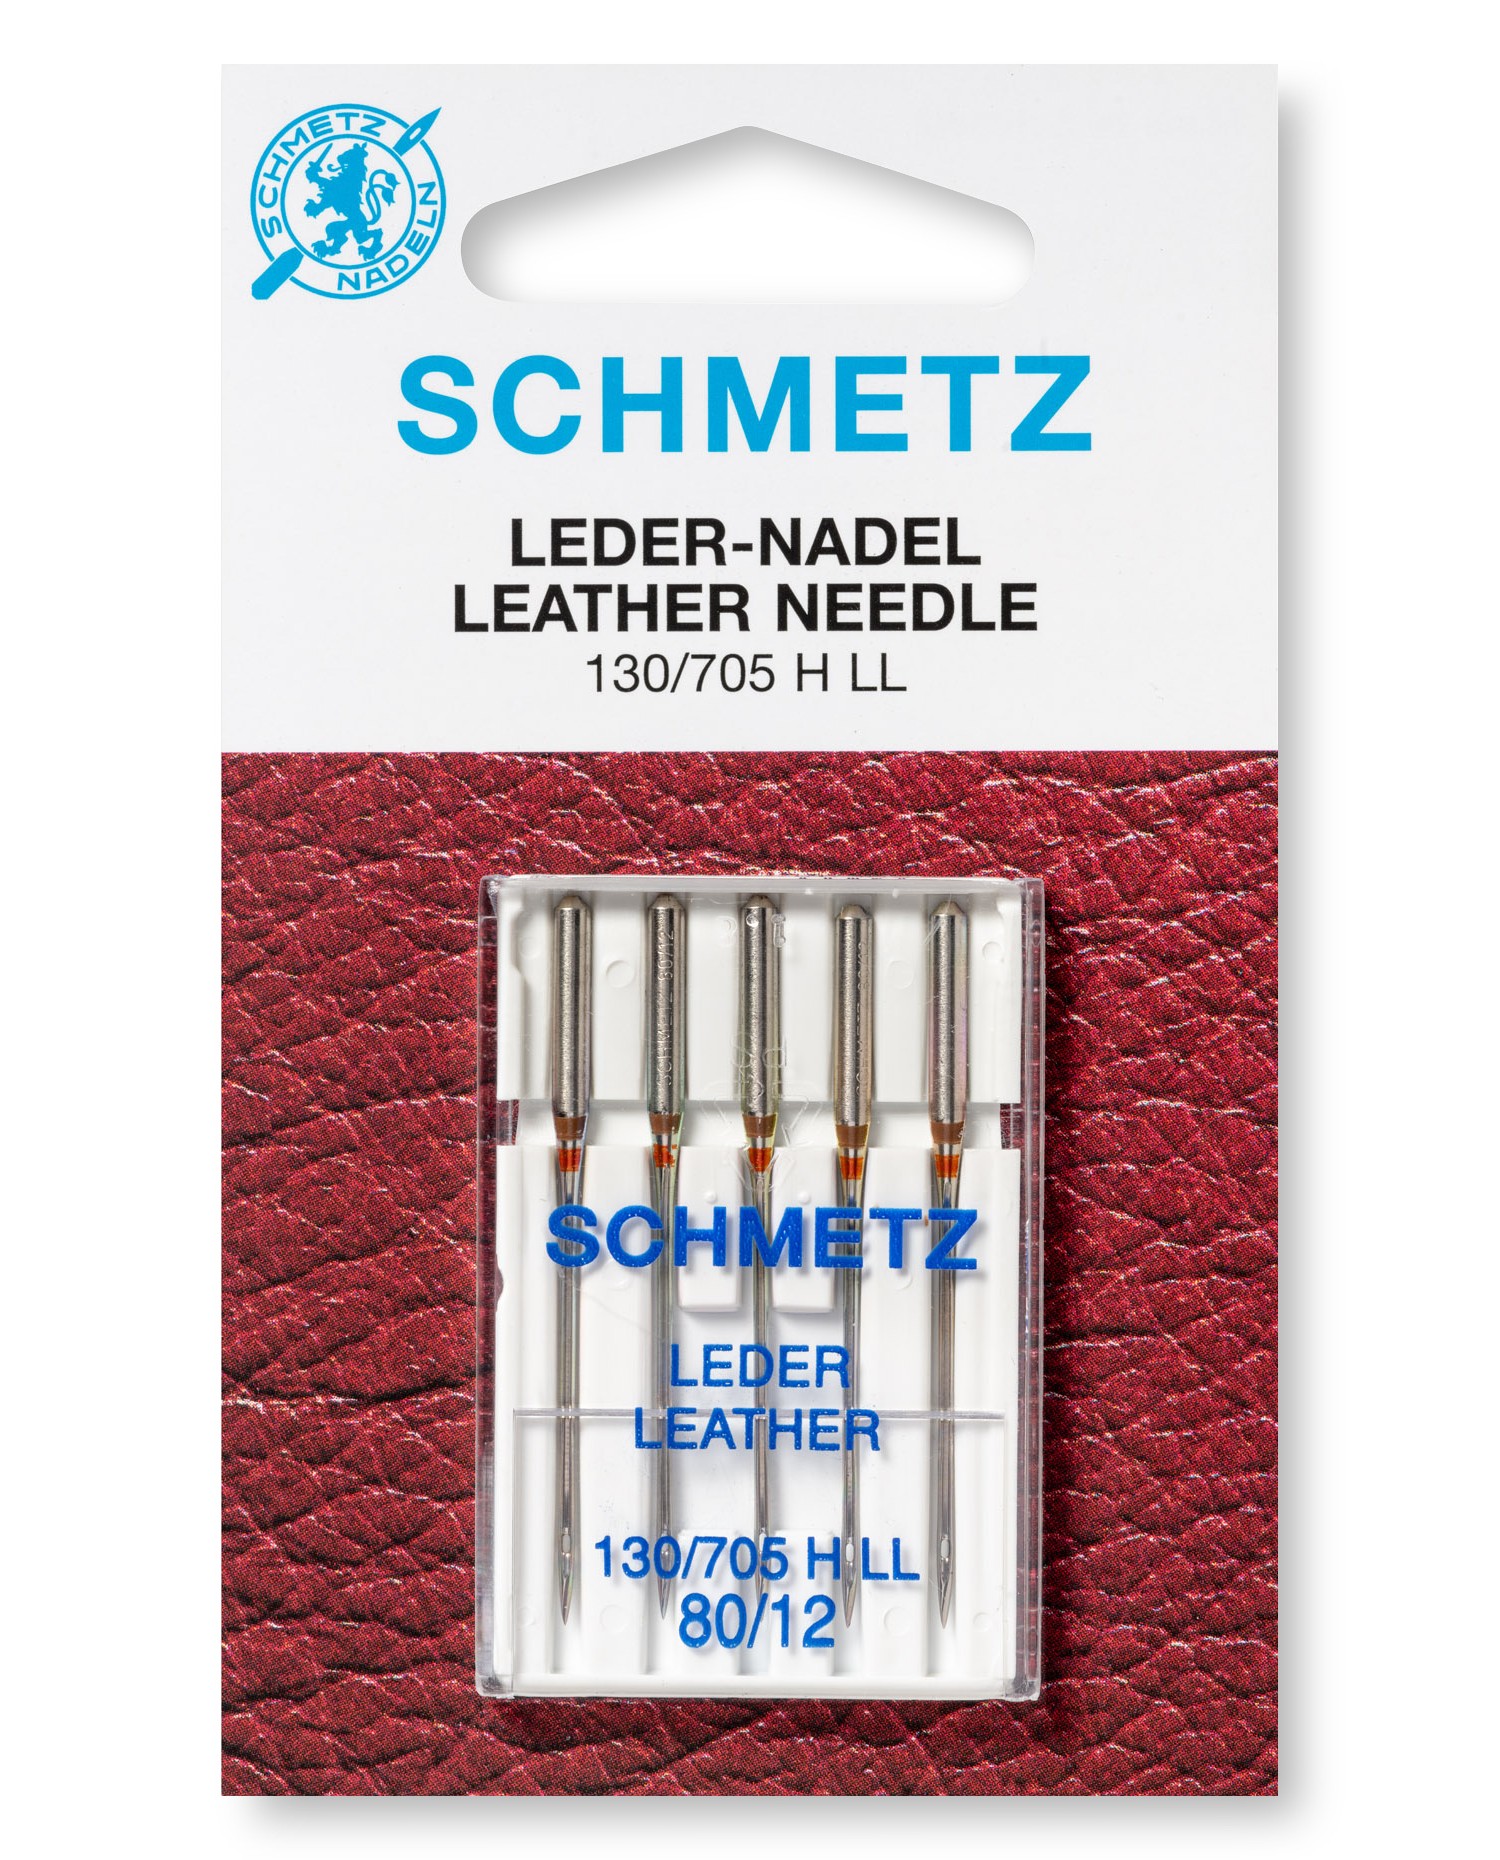 Schmetz Leather